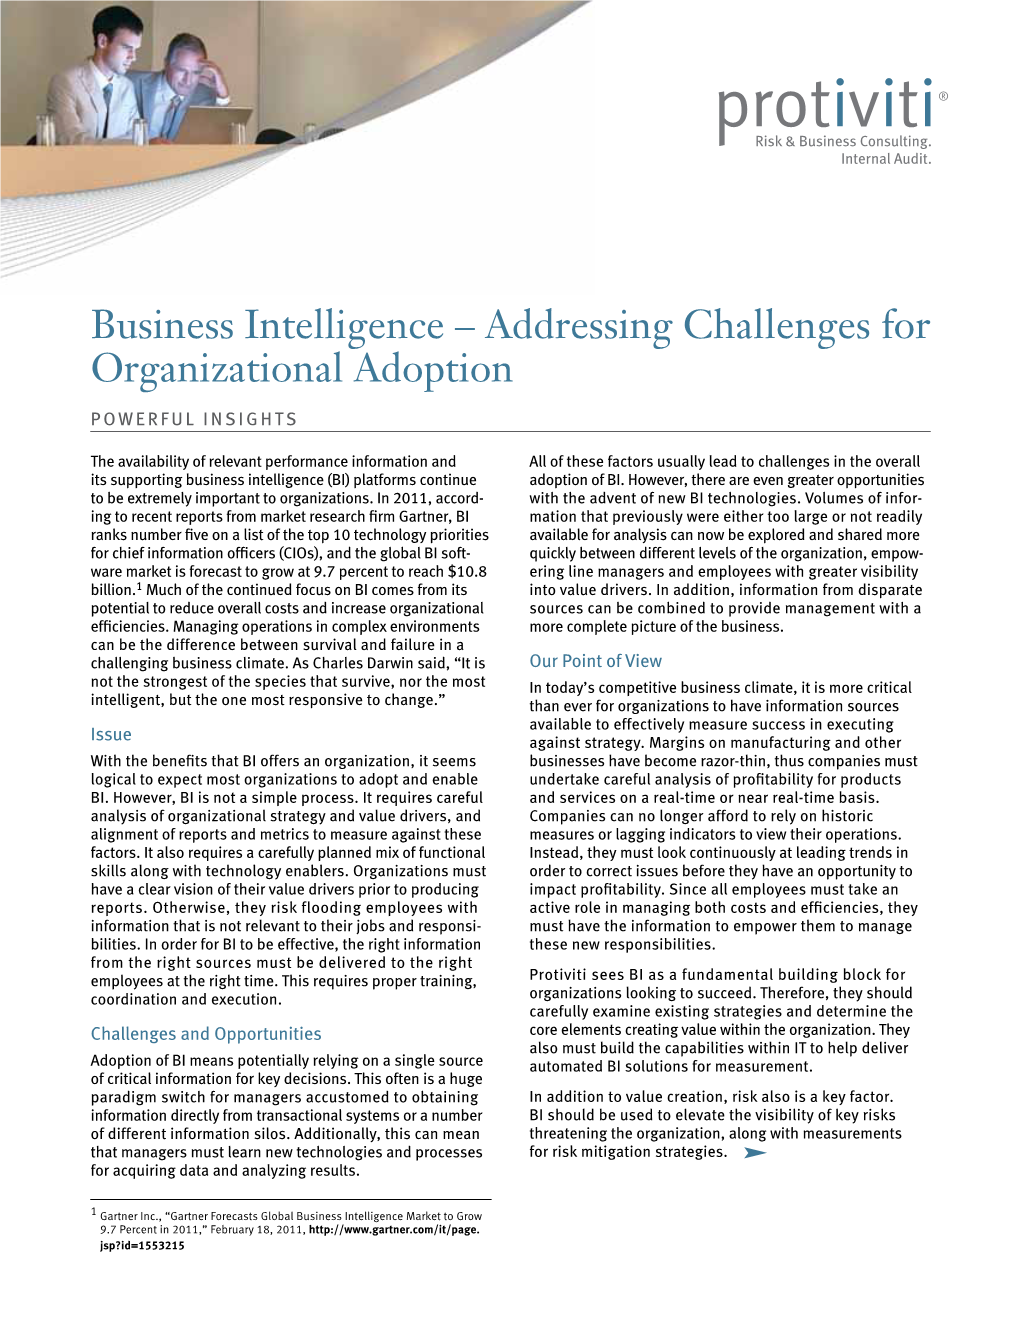 Business Intelligence – Addressing Challenges for Organizational Adoption